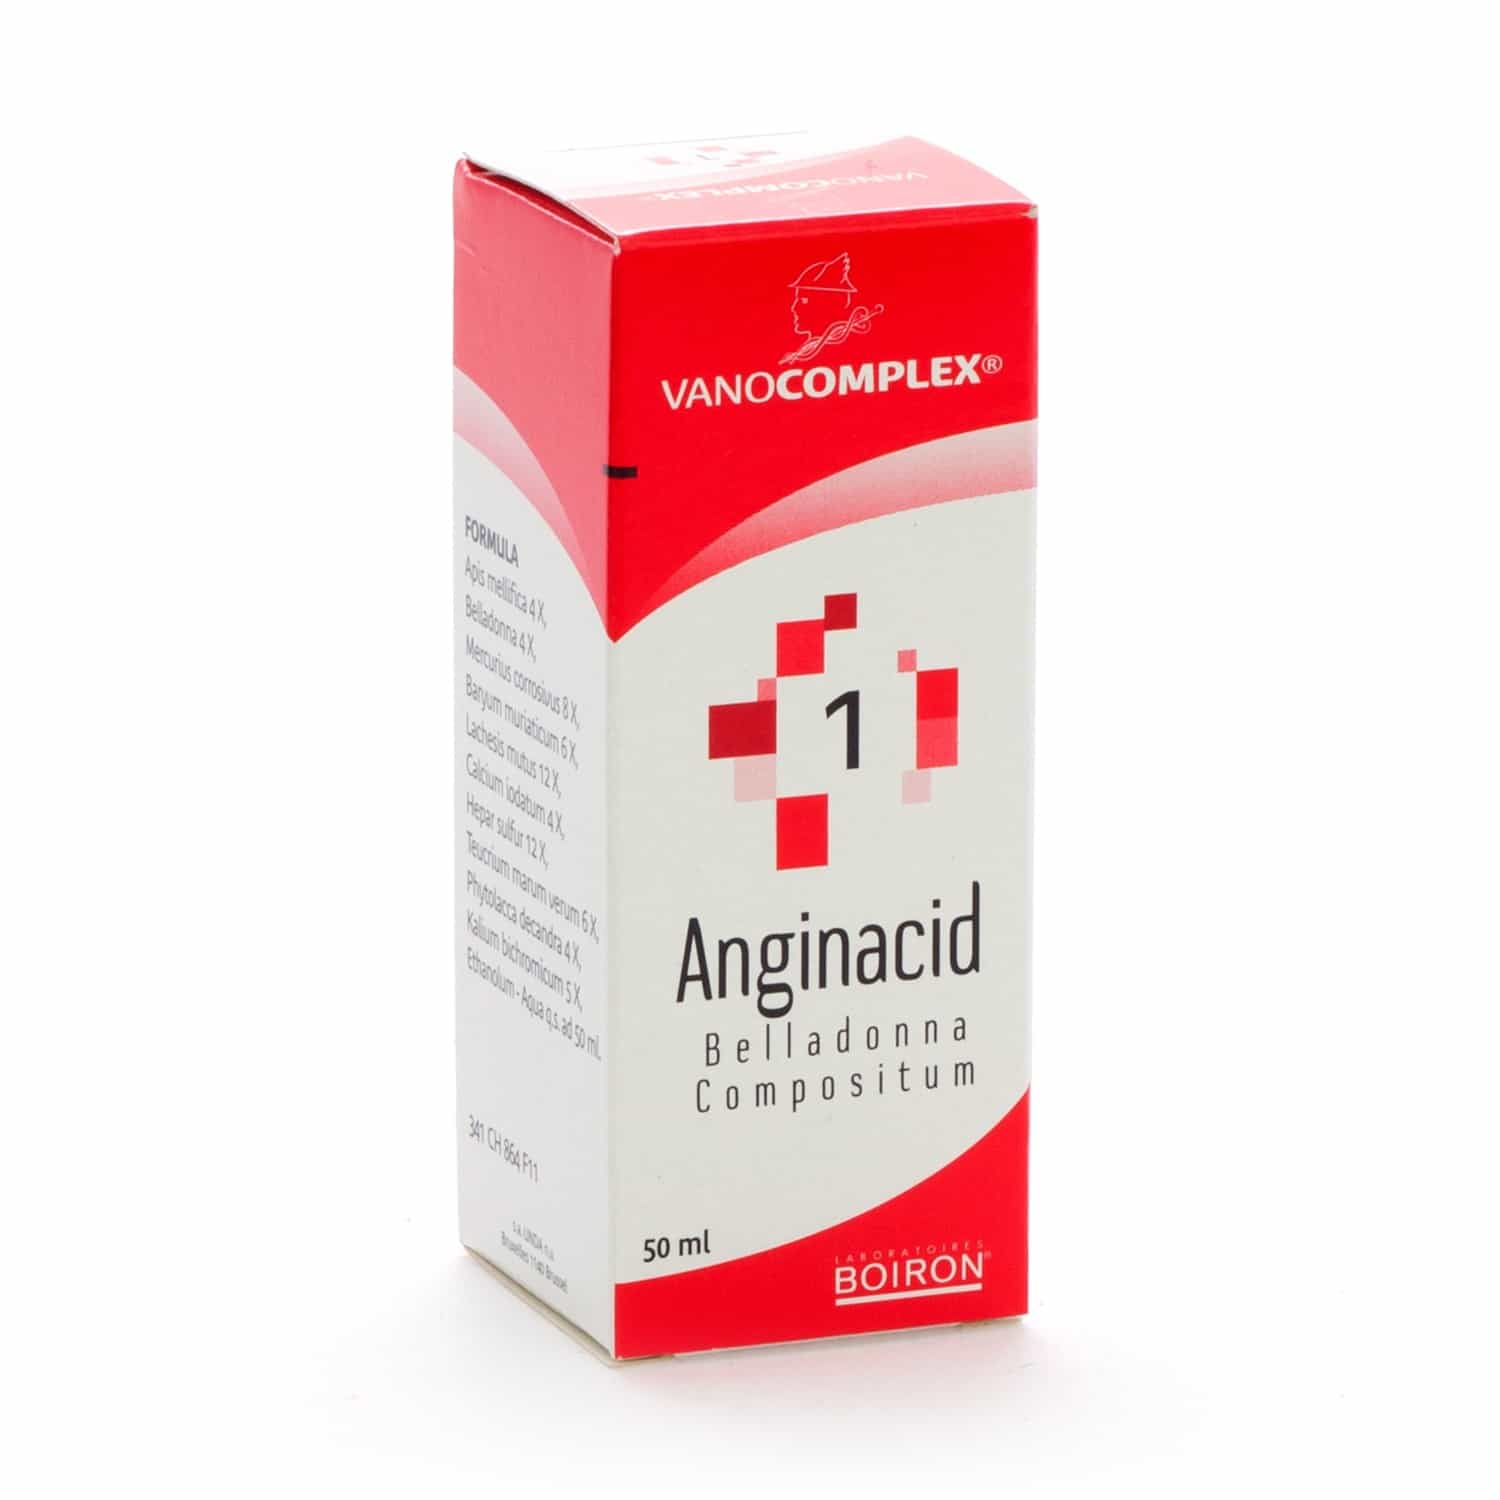 Vanocomplex Nr. 1 Anginacid